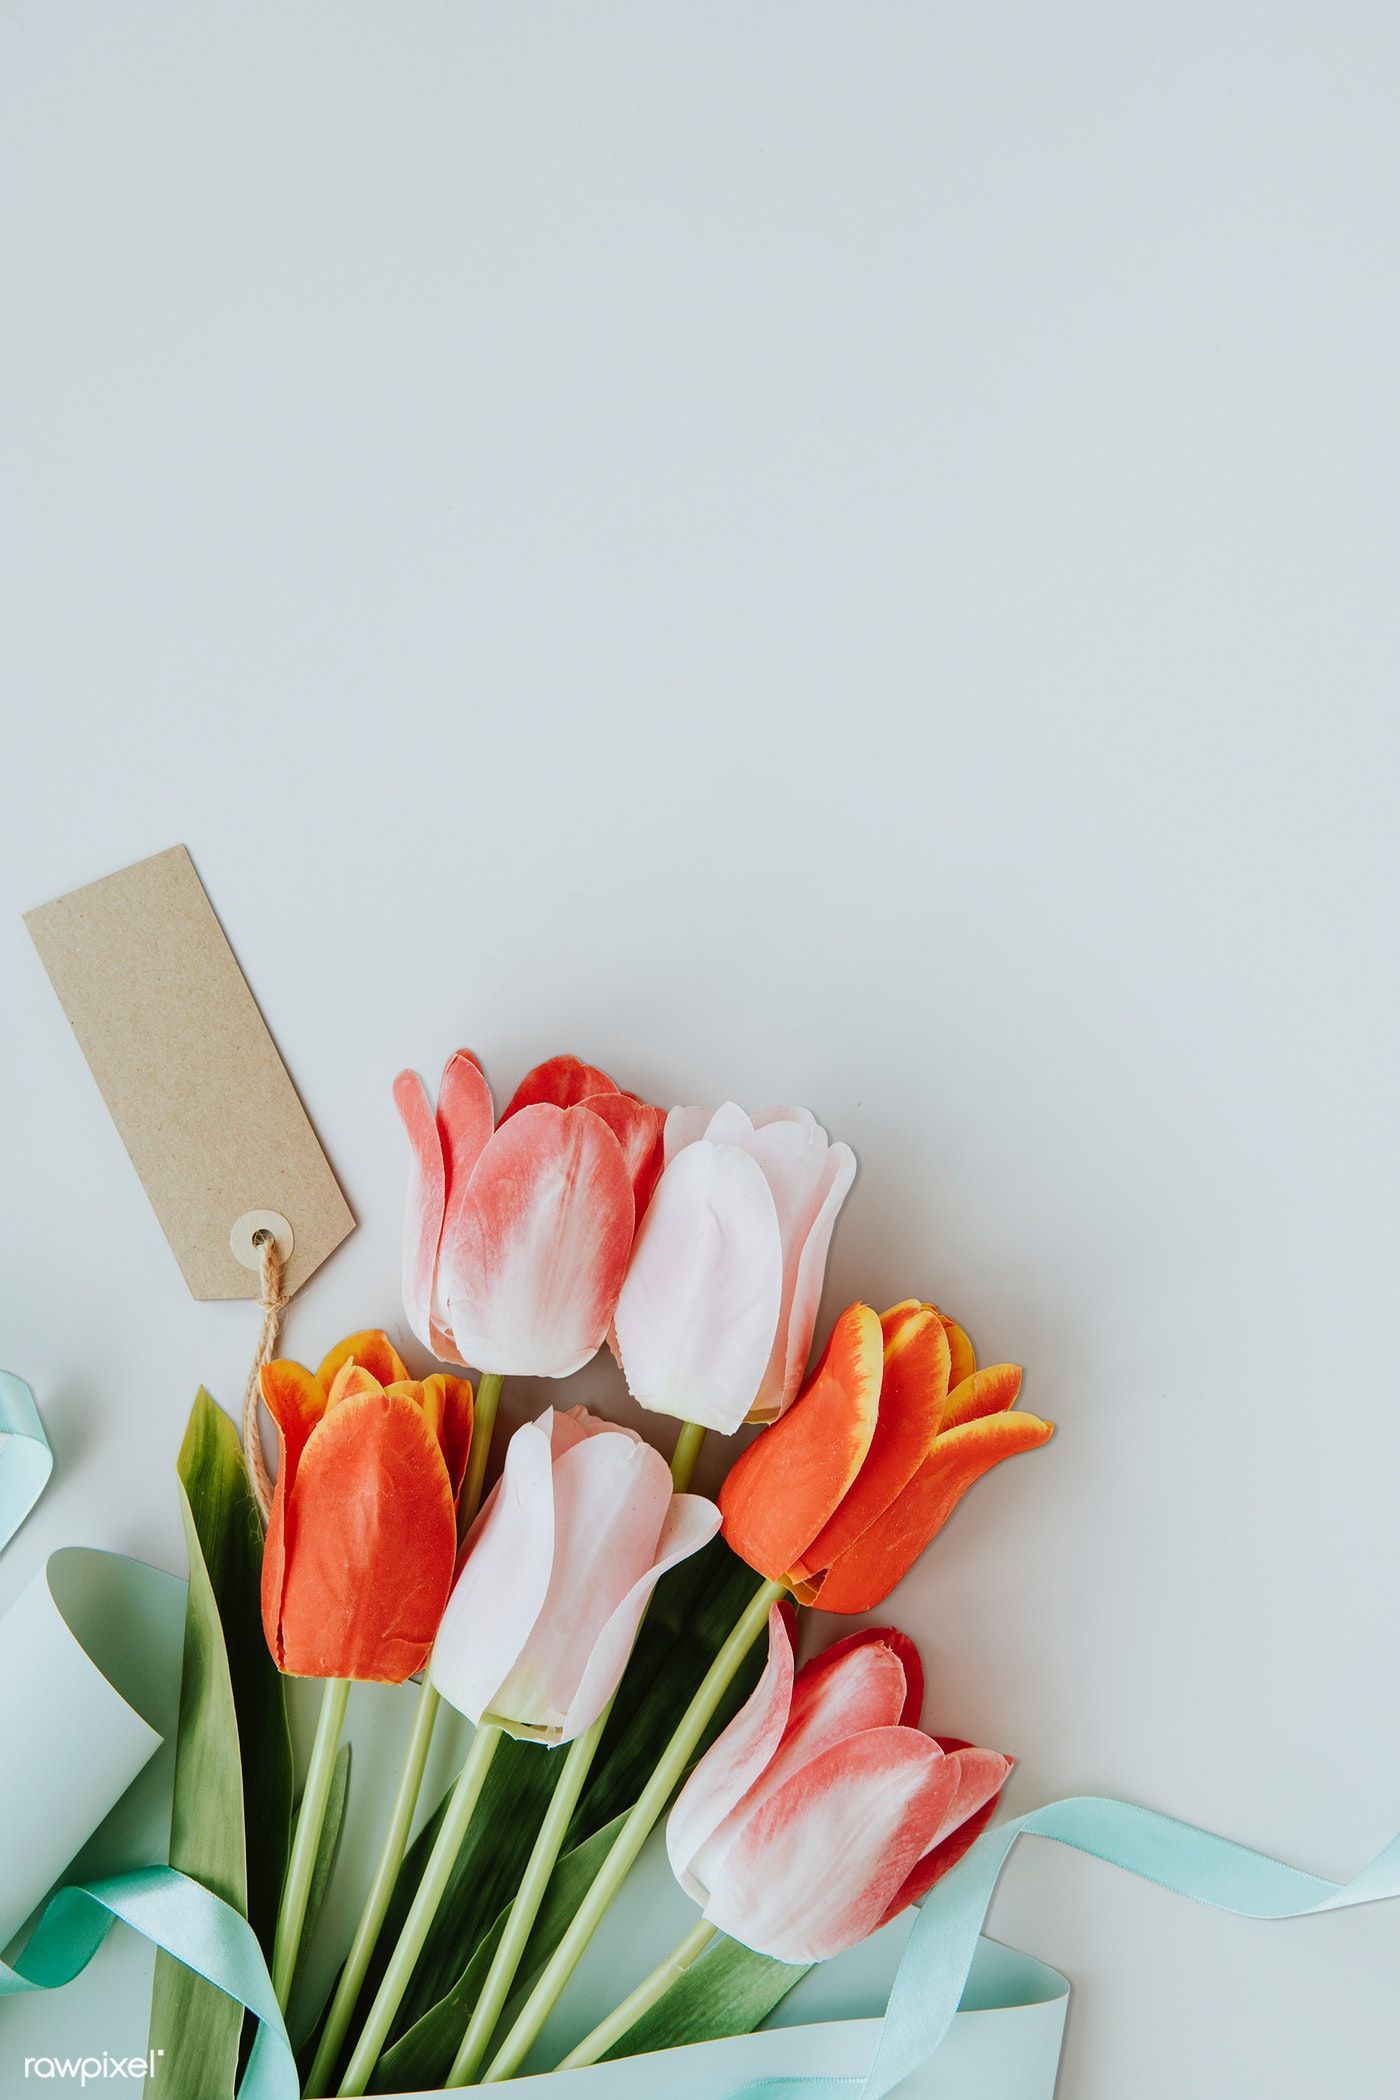 Download premium psd of Pink and orange tulips on blank gray background. Orange tulips, Tulips art, Pink and orange